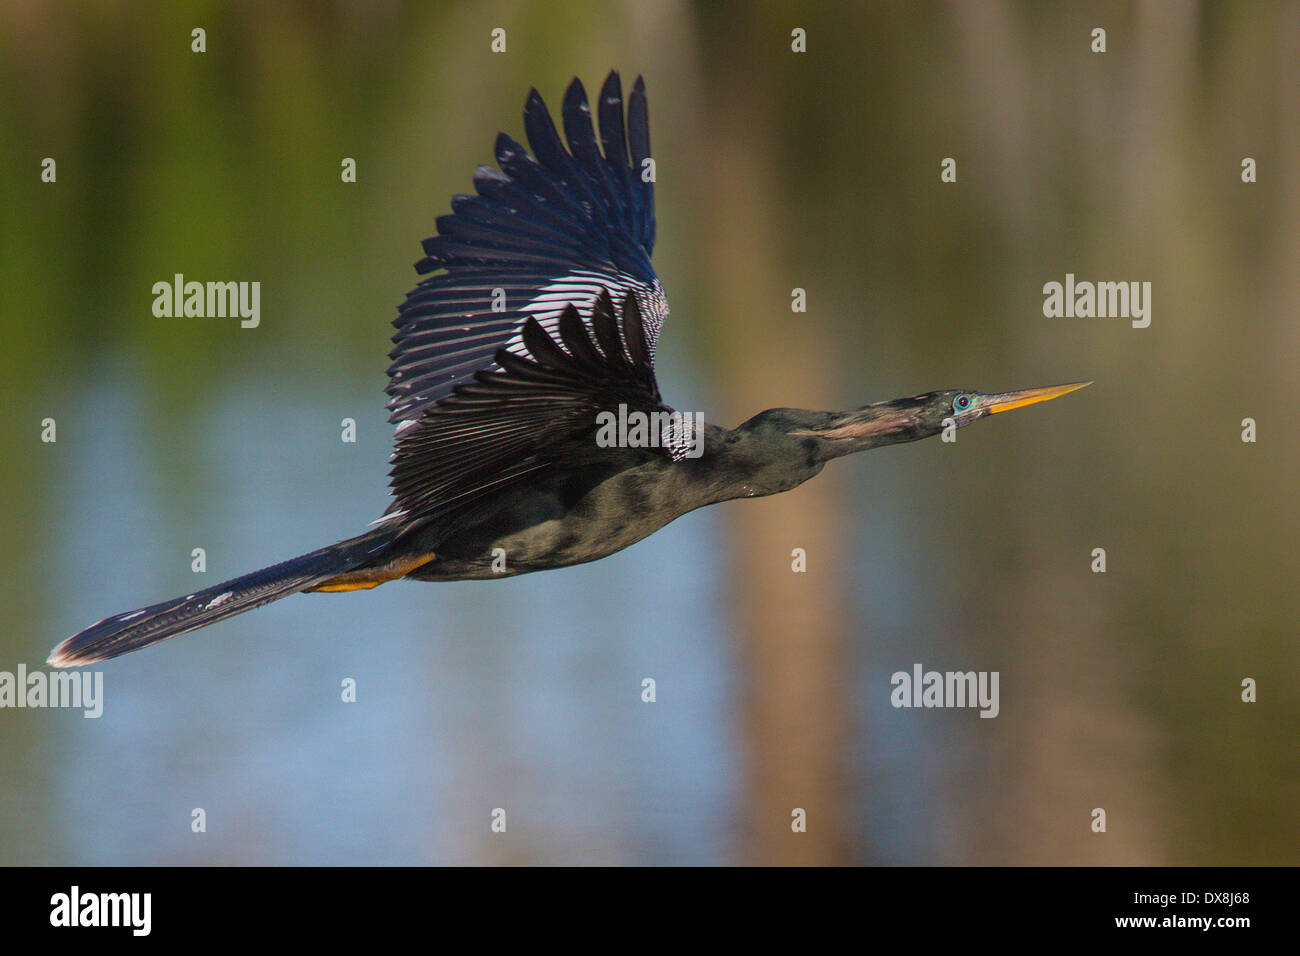 Anhinga auch bekannt als Snake Vogel, Wasser Türkei oder fliegen in Venice Florida Rookery Darter Stockfoto